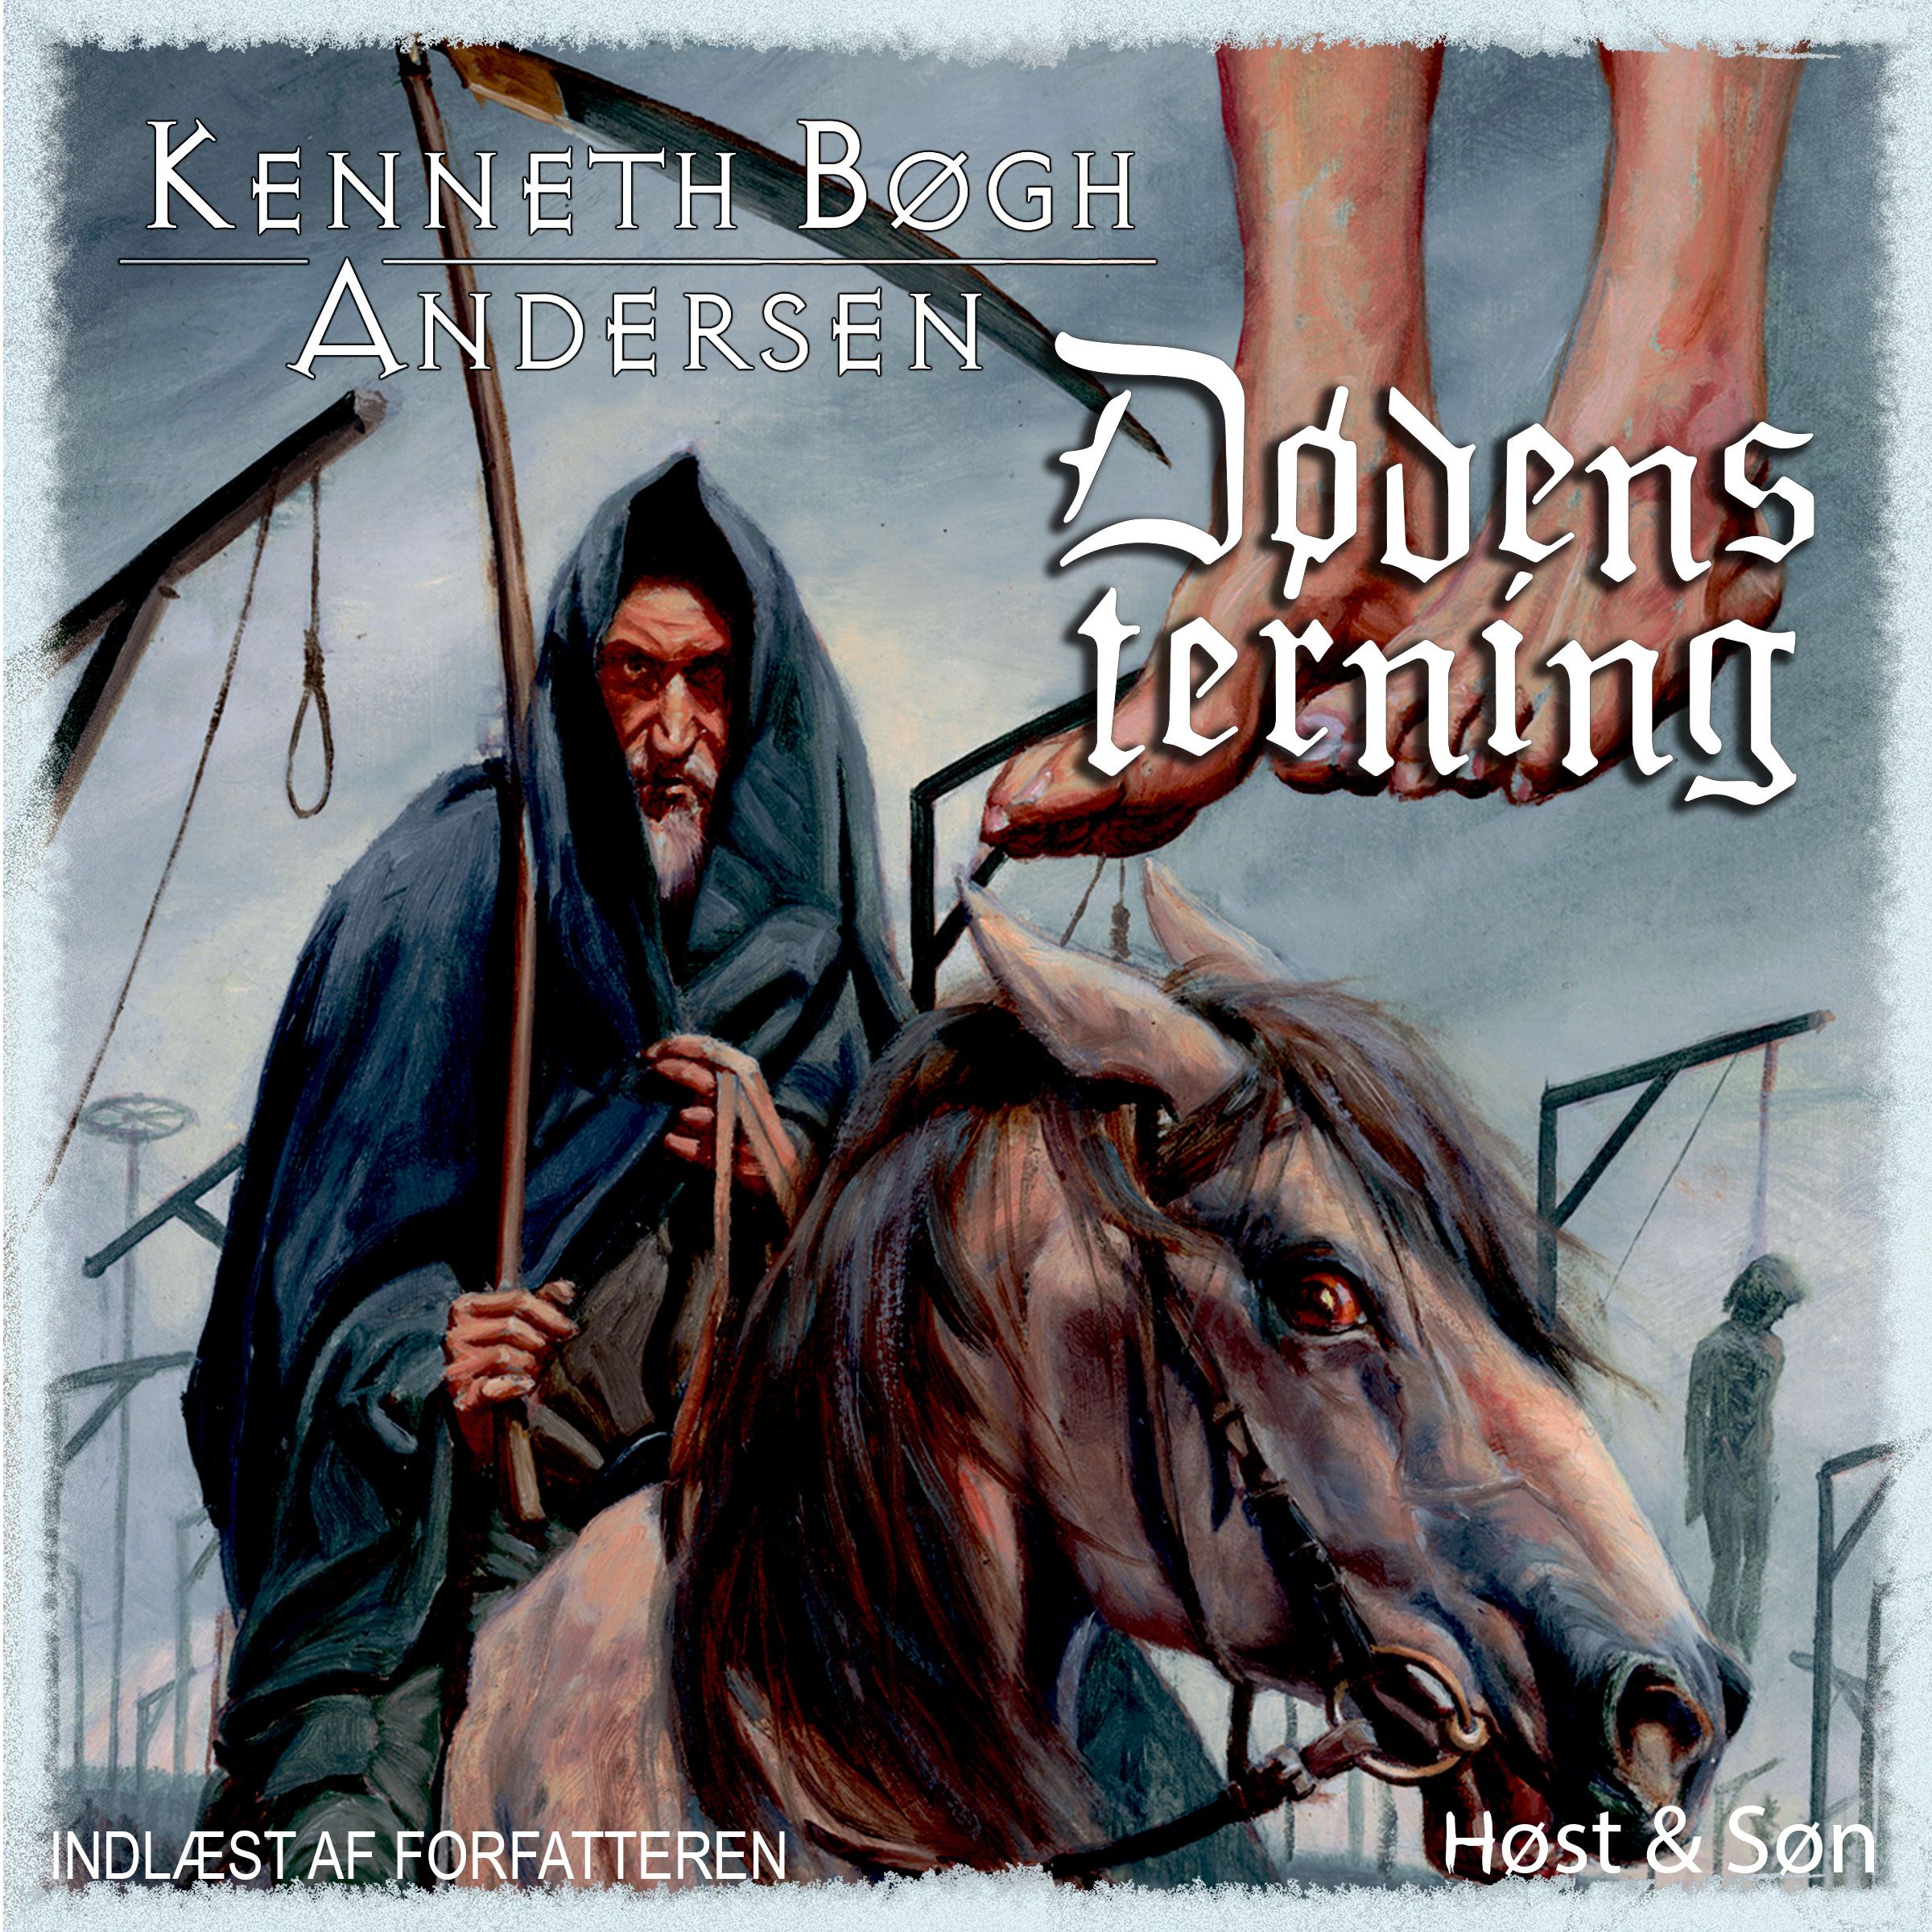 Dødens terning, audiobook by Kenneth Bøgh Andersen